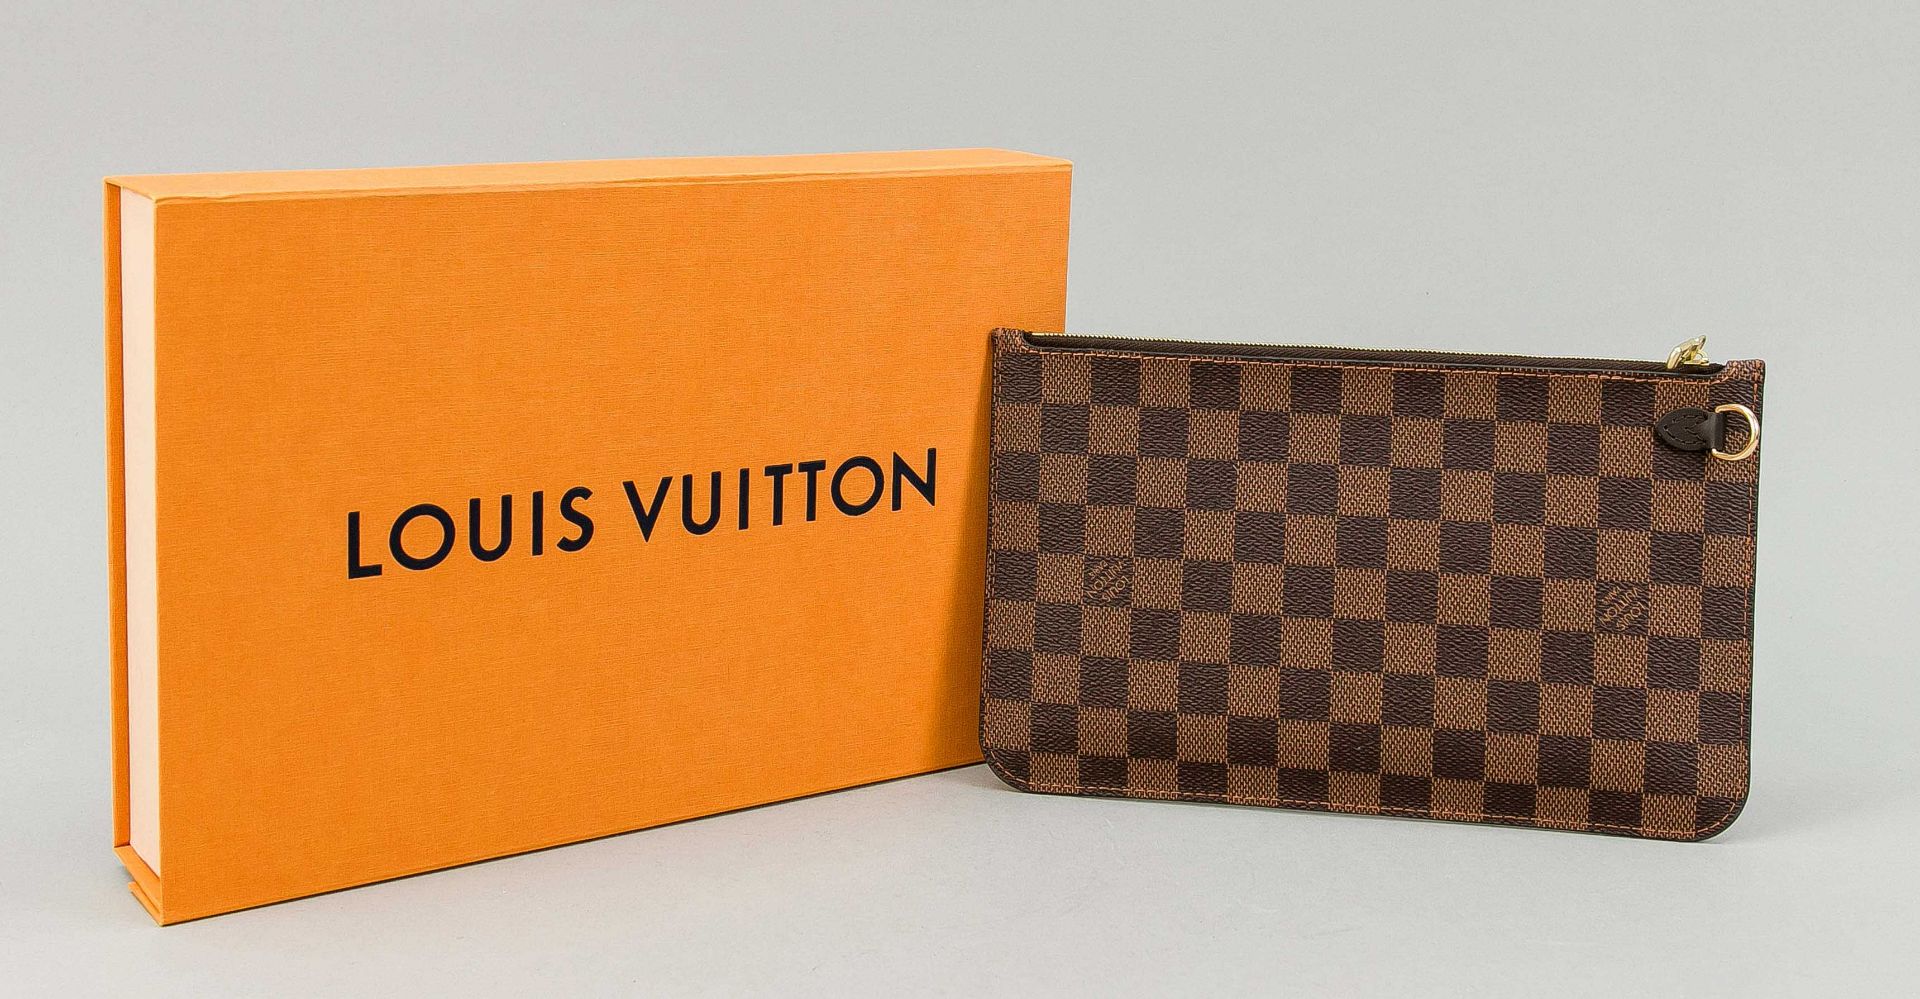 Louis Vuitton, Damier level monogram canvas pochette, rubberized cotton fabric in classic logo print